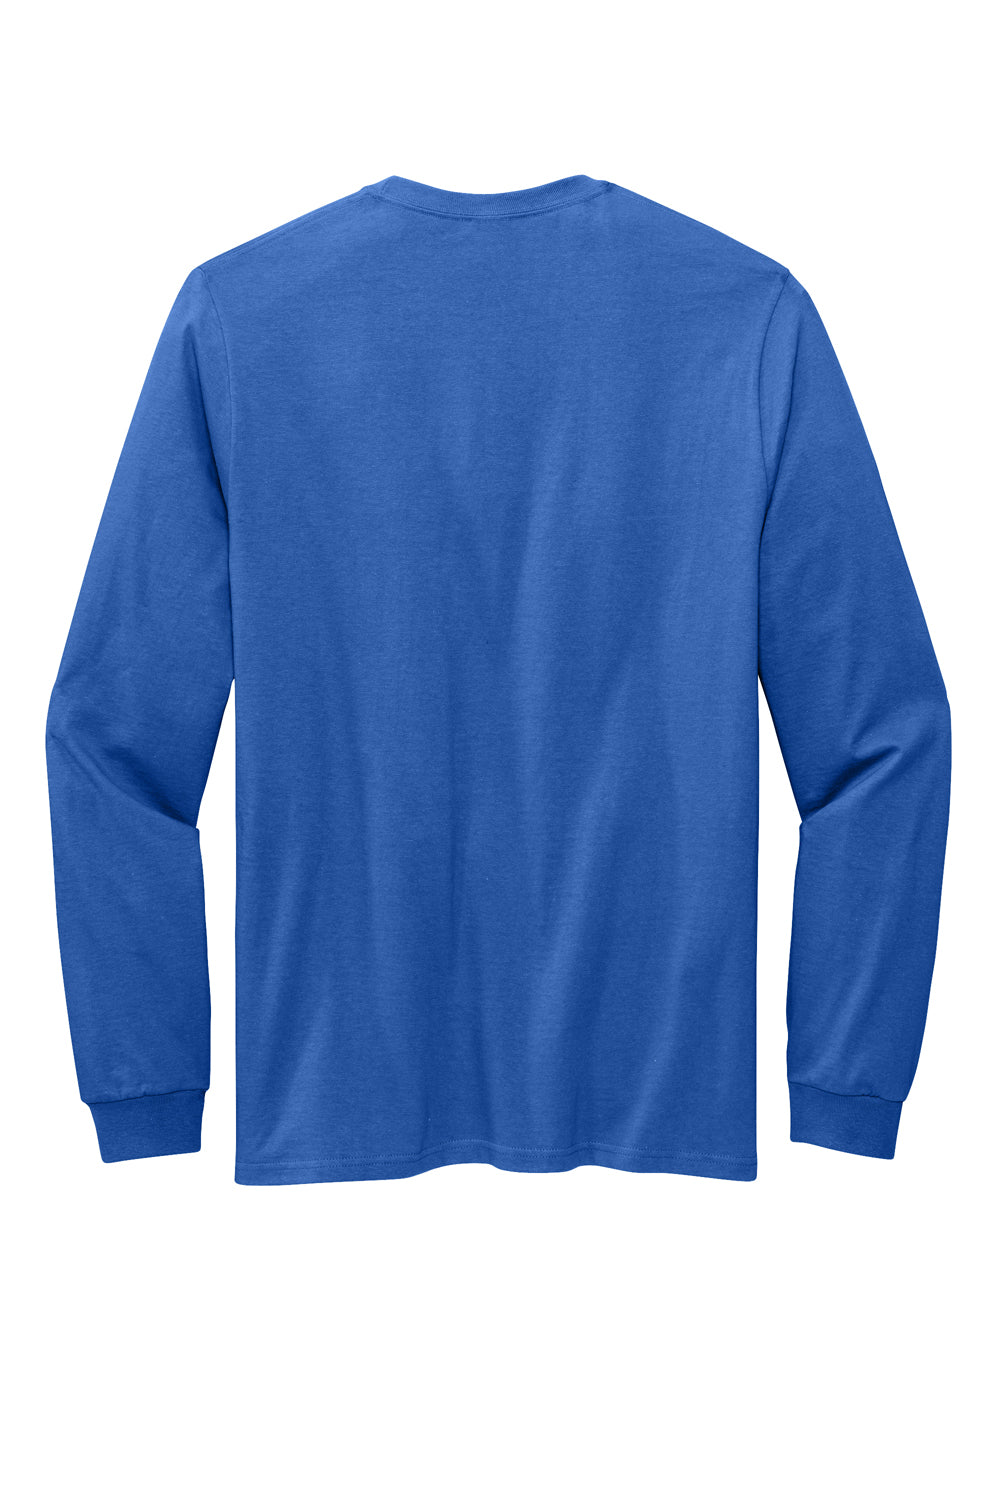 Volunteer Knitwear VL100LS USA Made All American Long Sleeve Crewneck T-Shirts True Royal Blue Flat Back